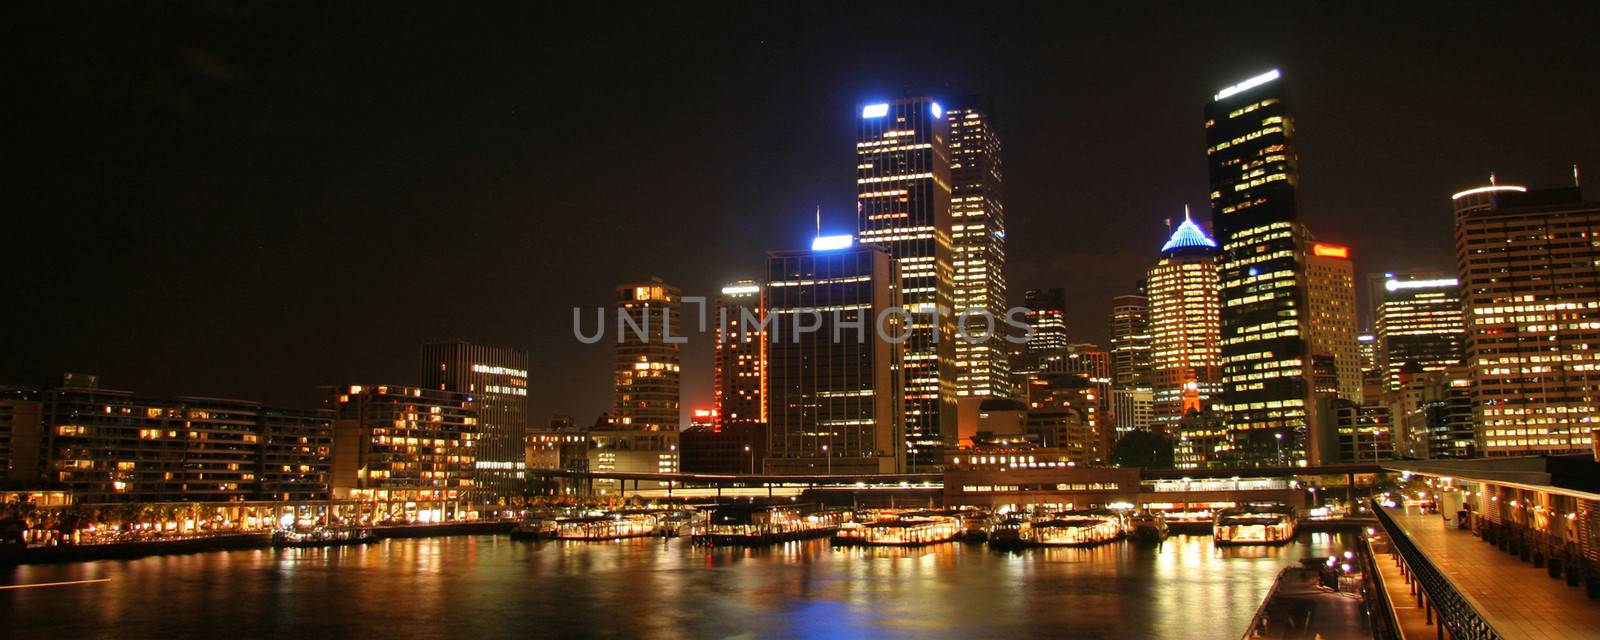 Sydney Harbor at night by CelsoDiniz